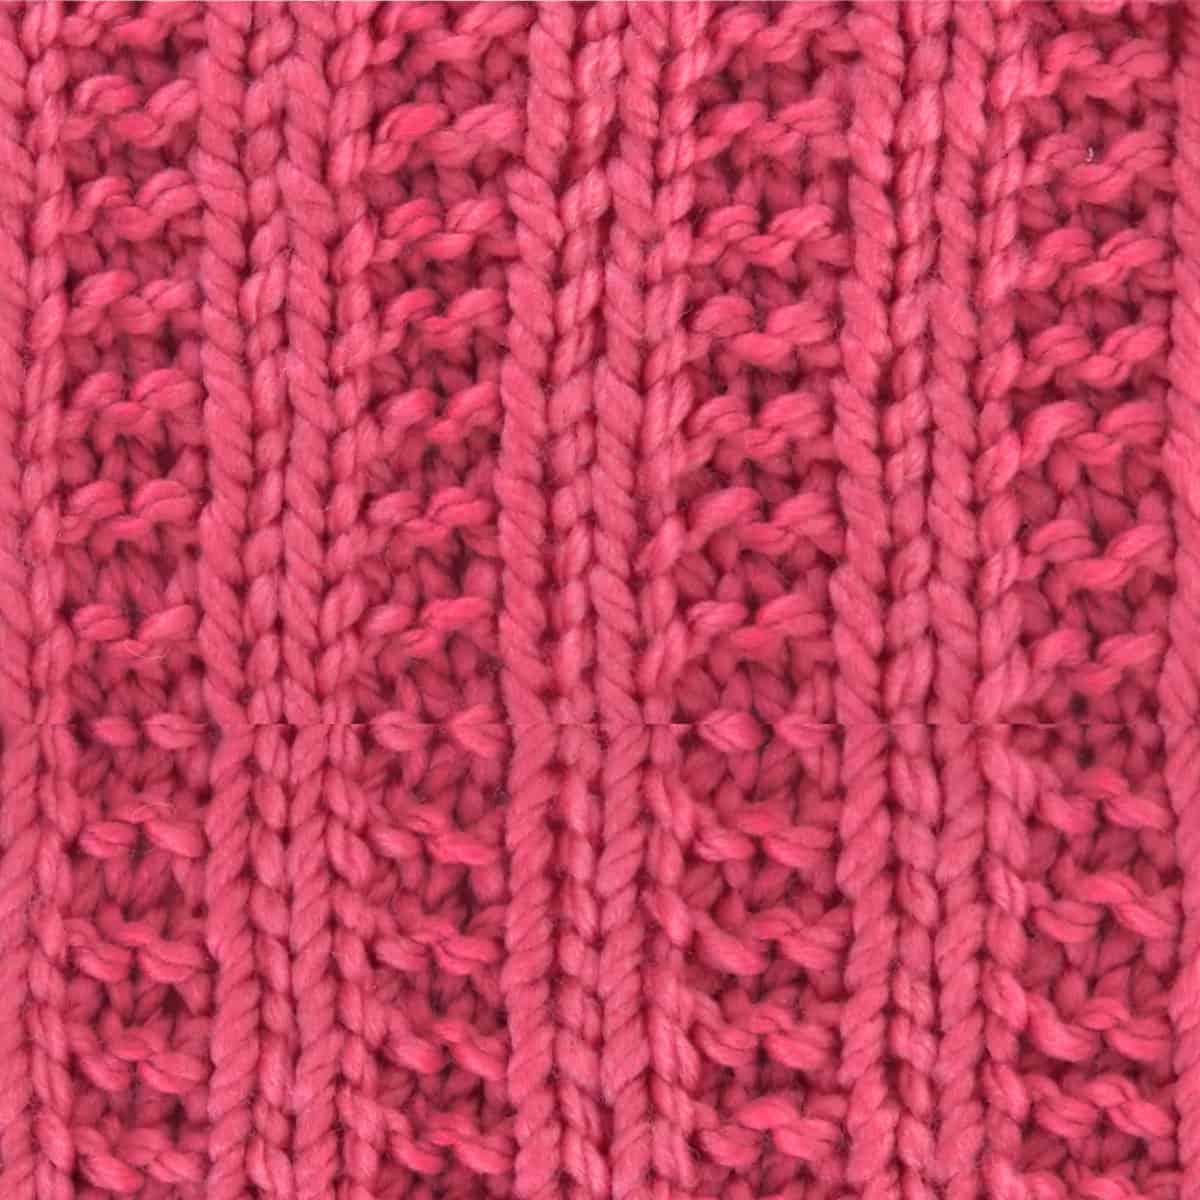 Garter Ribbing Stitch Knitting Pattern | Studio Knit